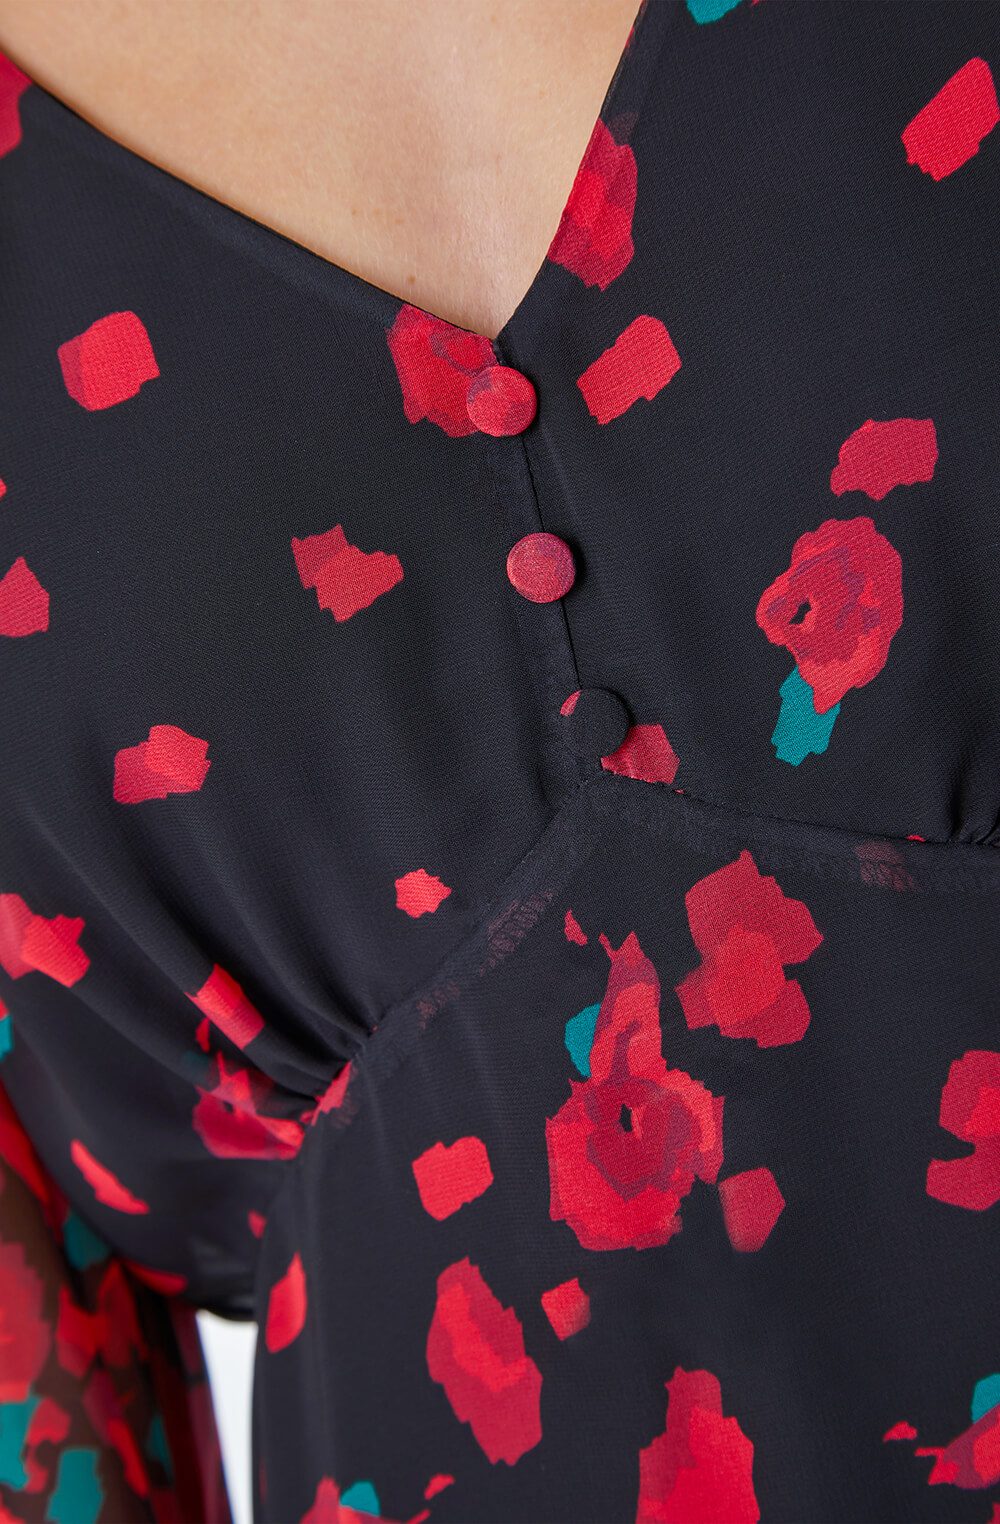 Red Rose Border Print Chiffon Dress, Image 5 of 5